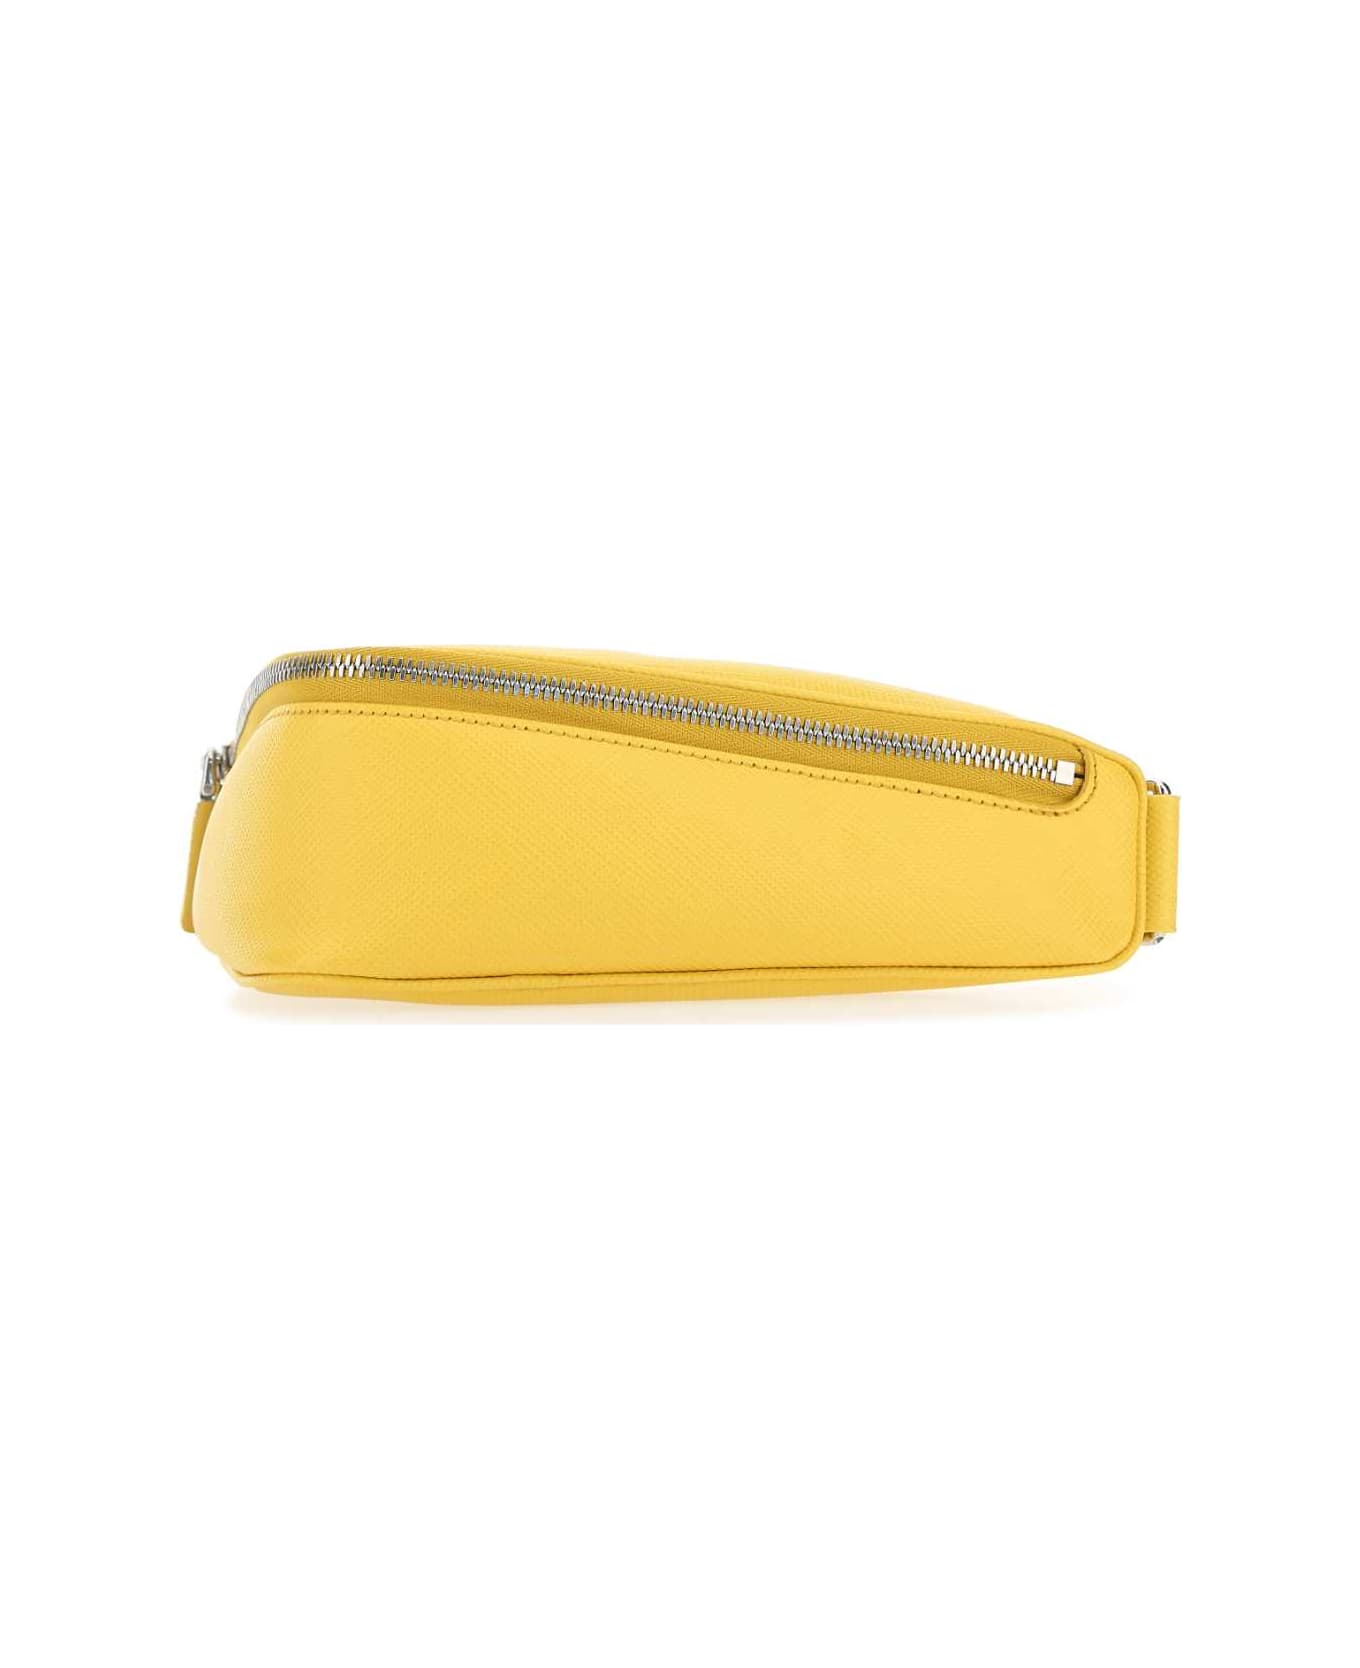 Prada Yellow Leather Belt Bag - F0377